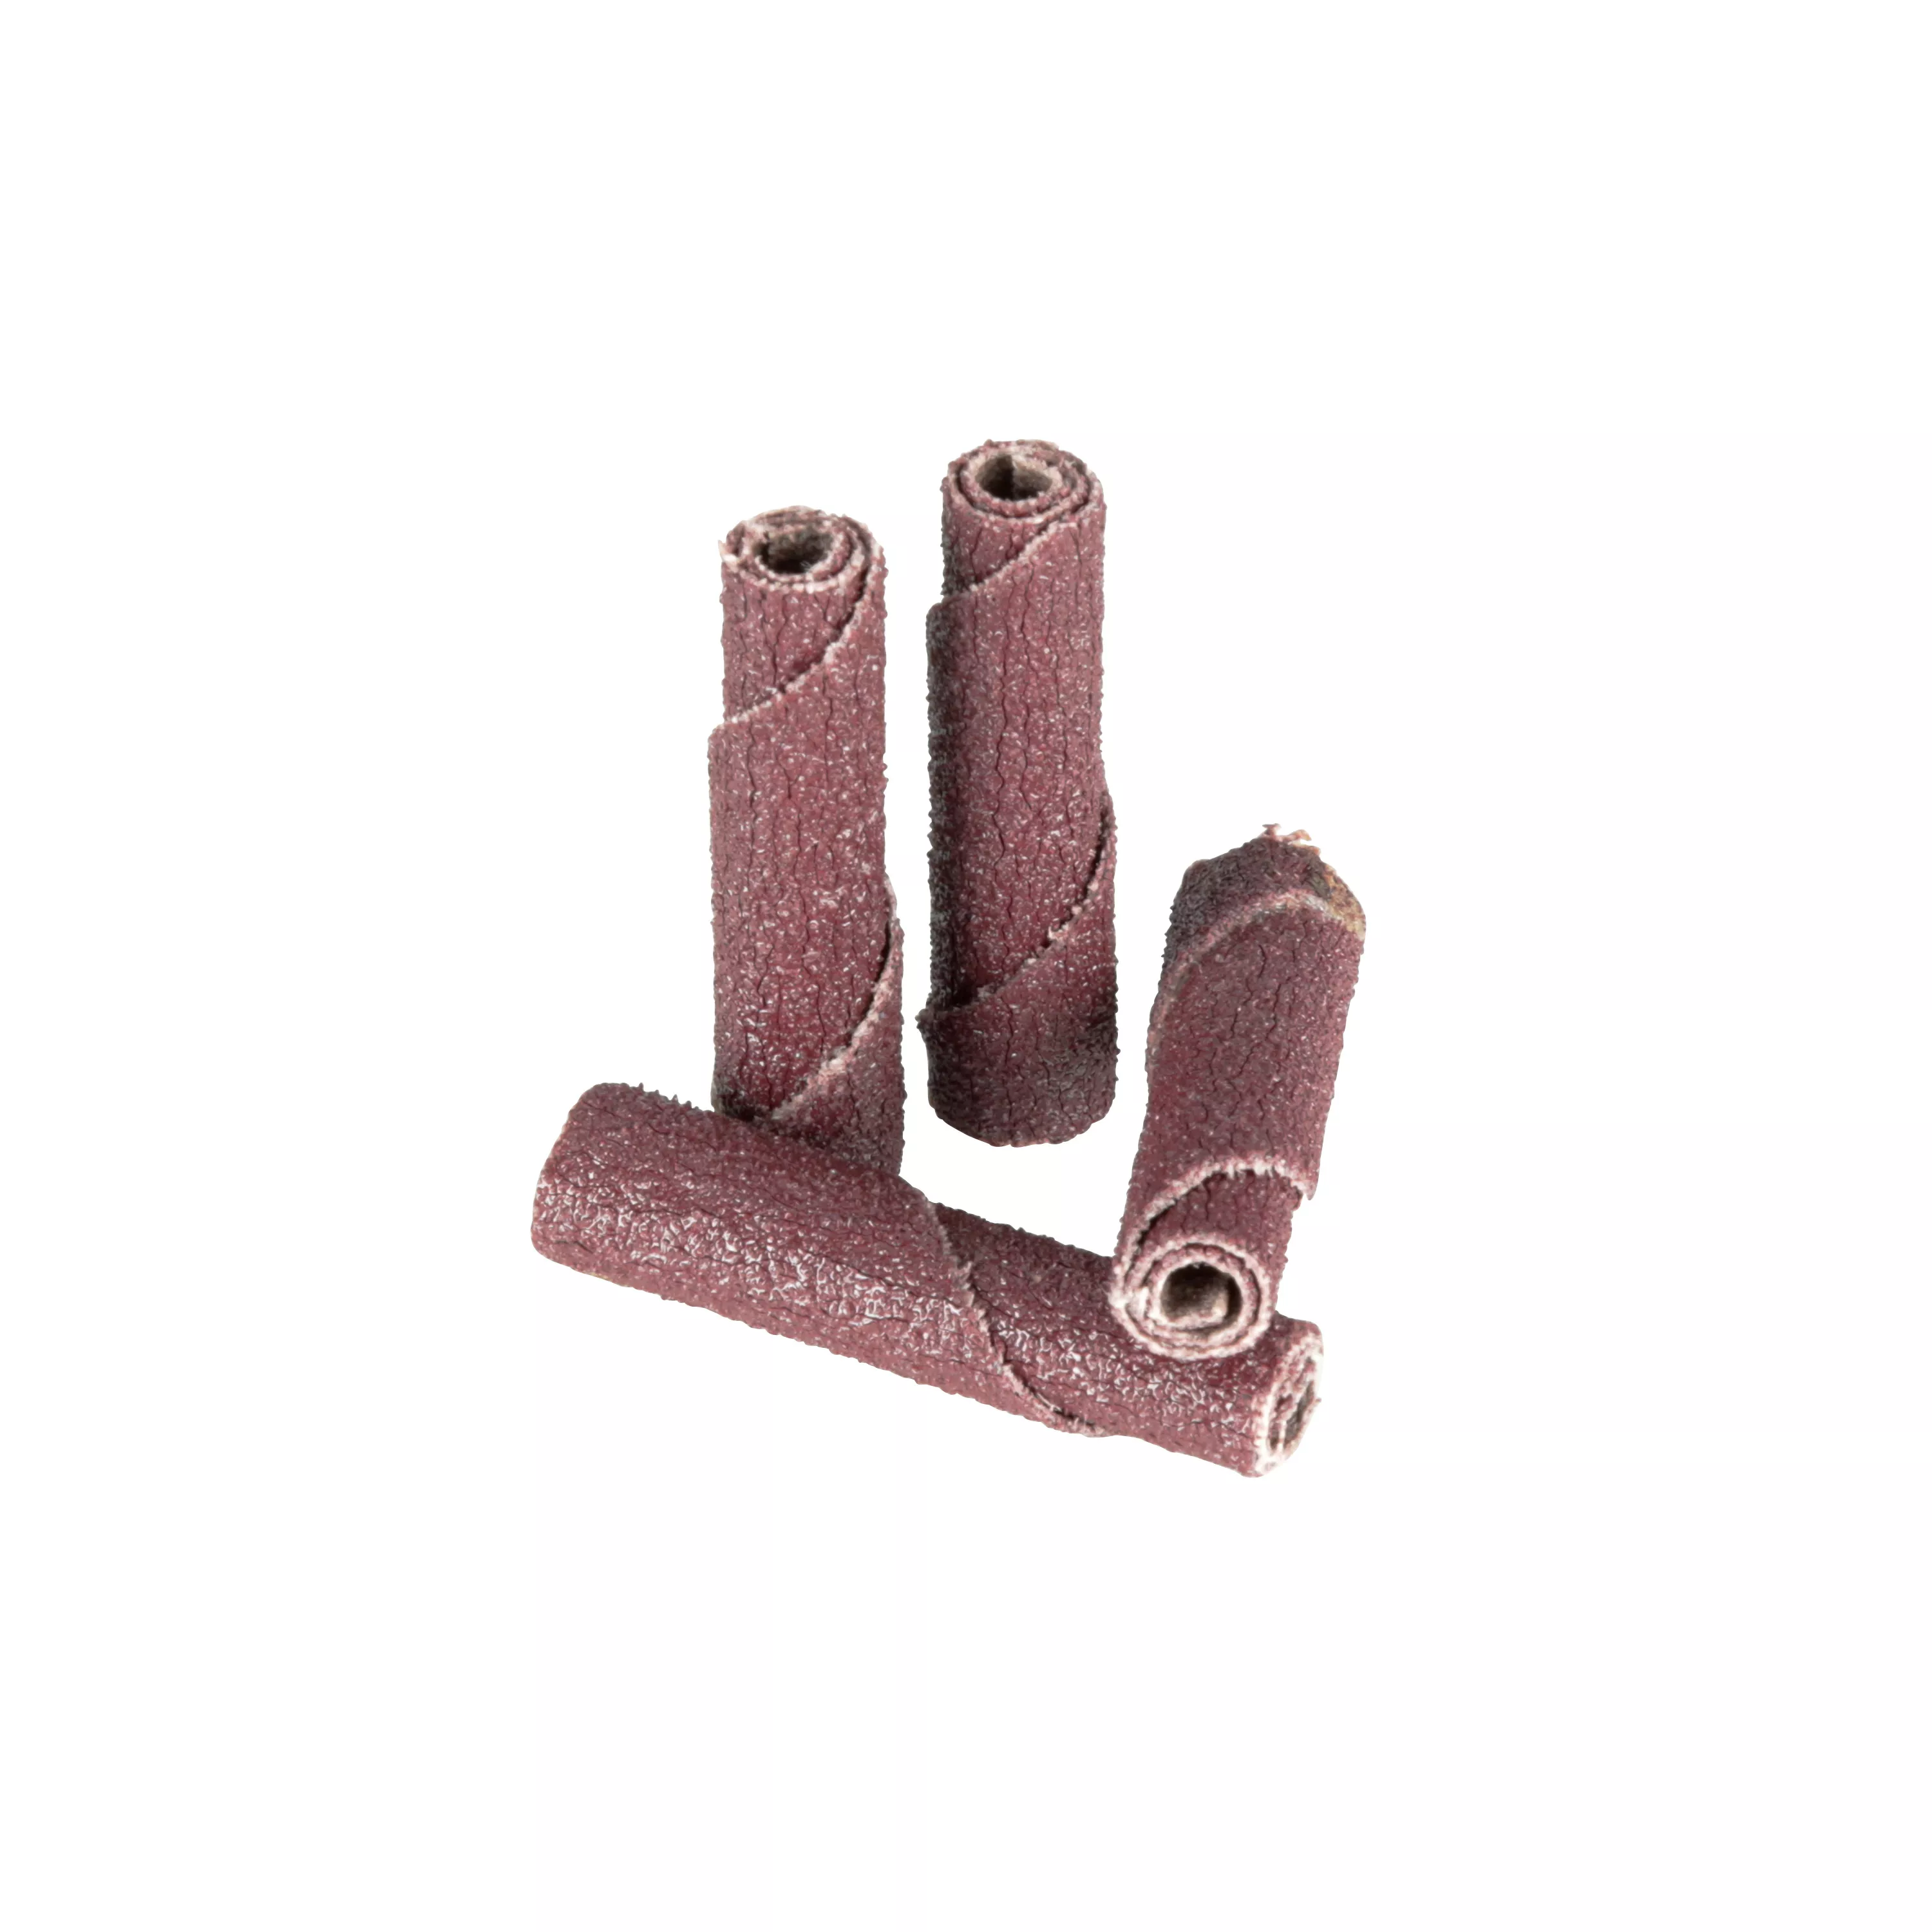 Standard Abrasives™ Aluminum Oxide Cartridge Roll, 701320, CR-HT, 80,
3/8 in x 1-1/2 in x 1/8 in, Half Tapered, 100 ea/Case